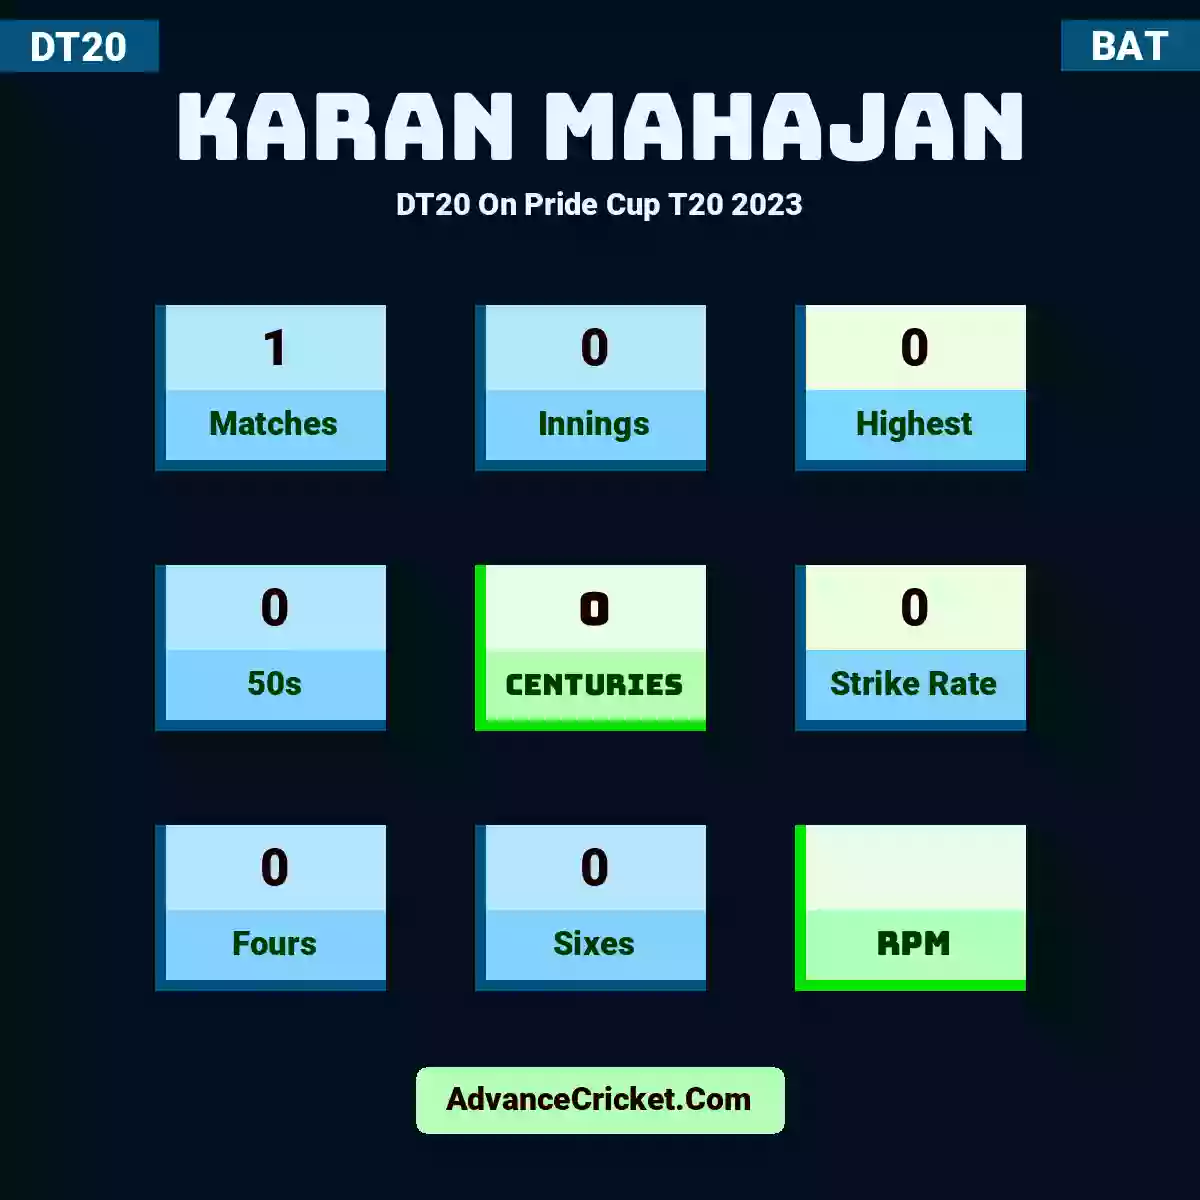 Karan Mahajan DT20  On Pride Cup T20 2023, Karan Mahajan played 1 matches, scored 0 runs as highest, 0 half-centuries, and 0 centuries, with a strike rate of 0. K.Mahajan hit 0 fours and 0 sixes.